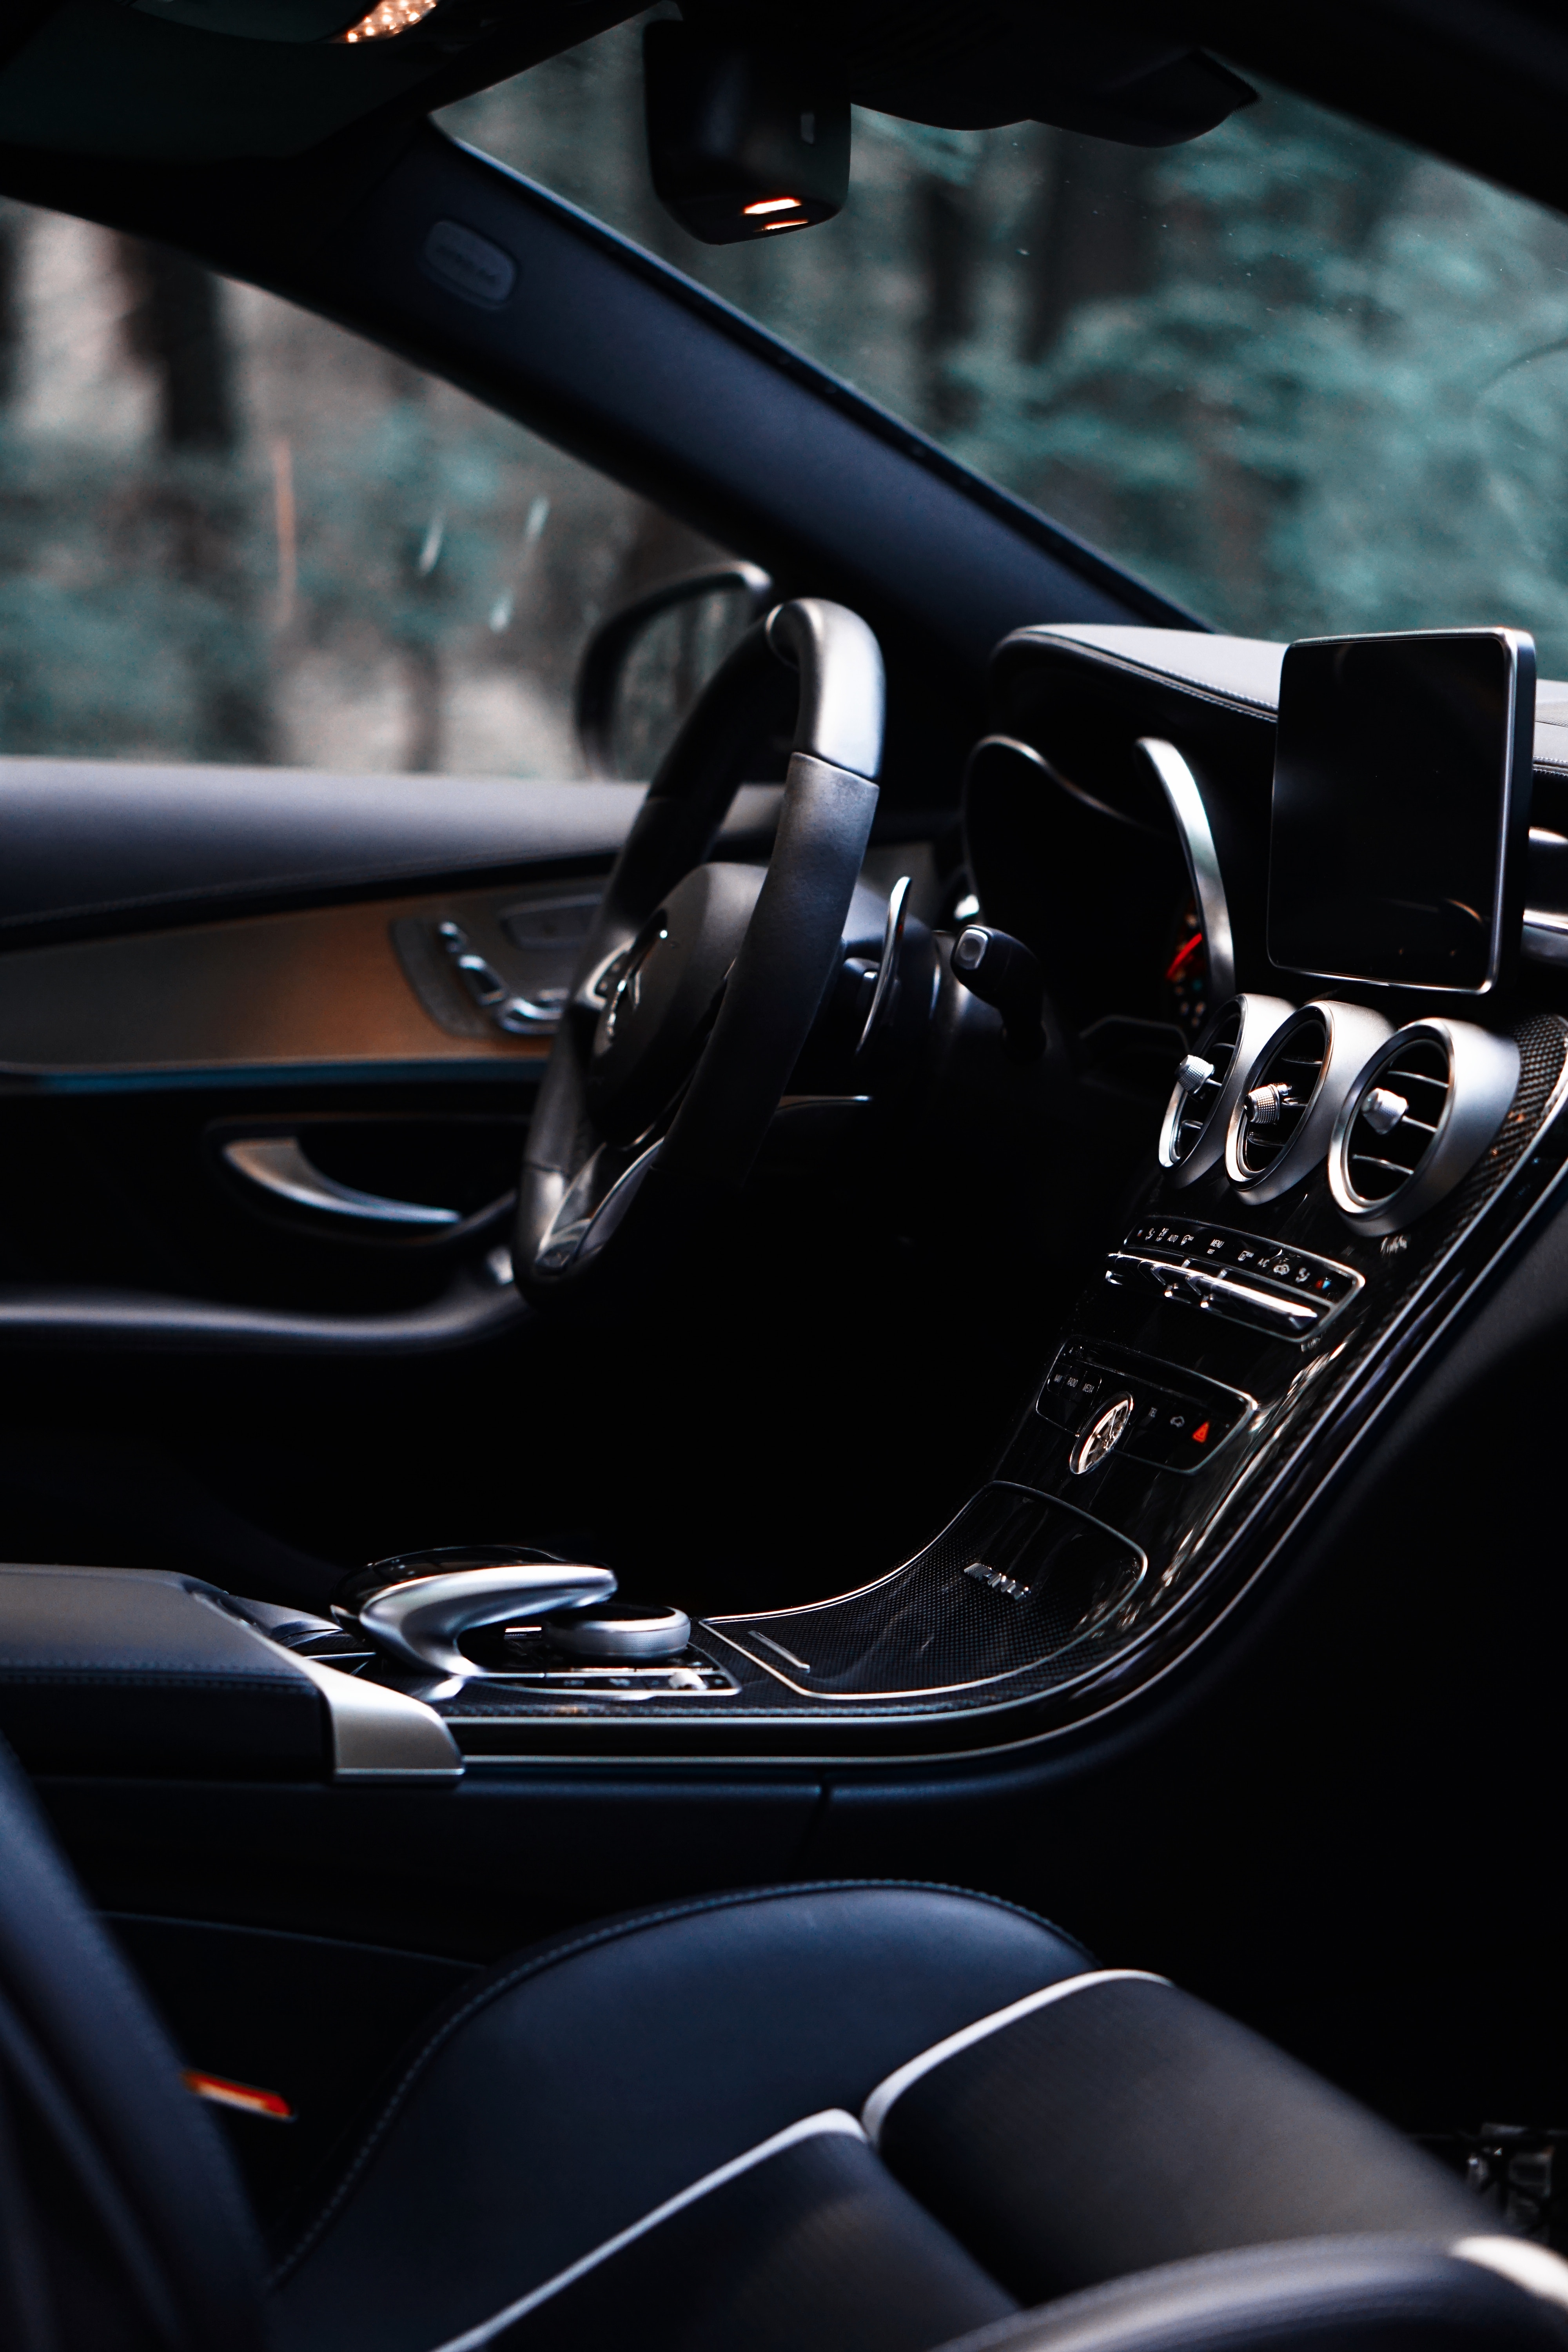 rudder, salon, cars, interior, black, car, machine, steering wheel, control panel